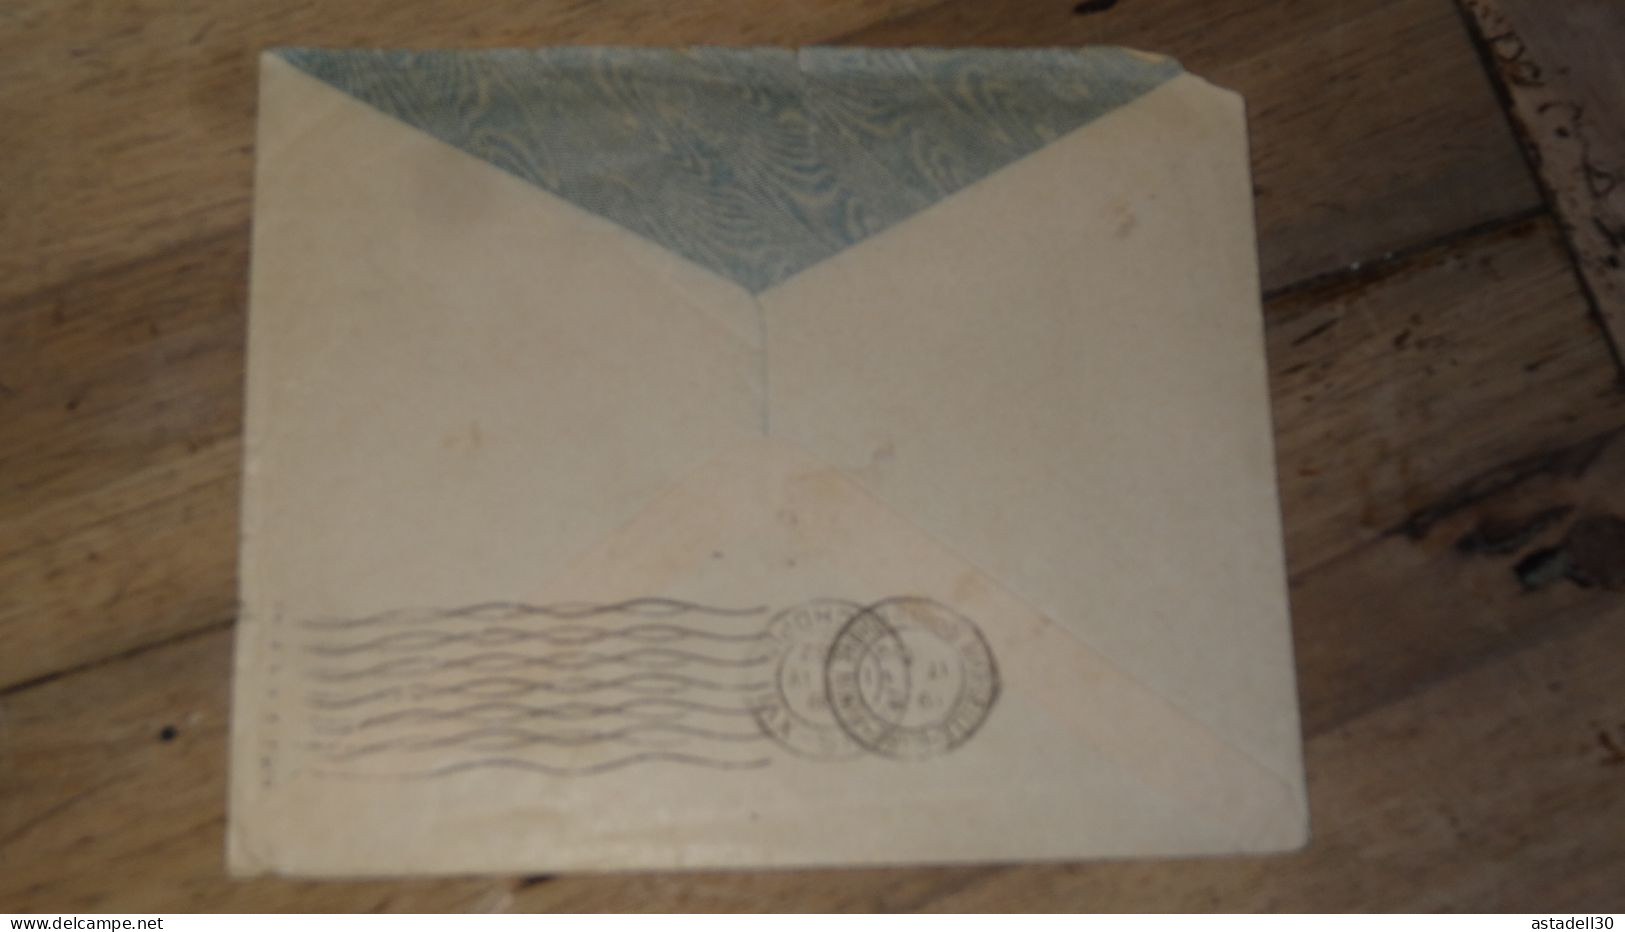 Enveloppe Indochine, Avion, 1932   ......... Boite1 ...... 240424-62 - Lettres & Documents